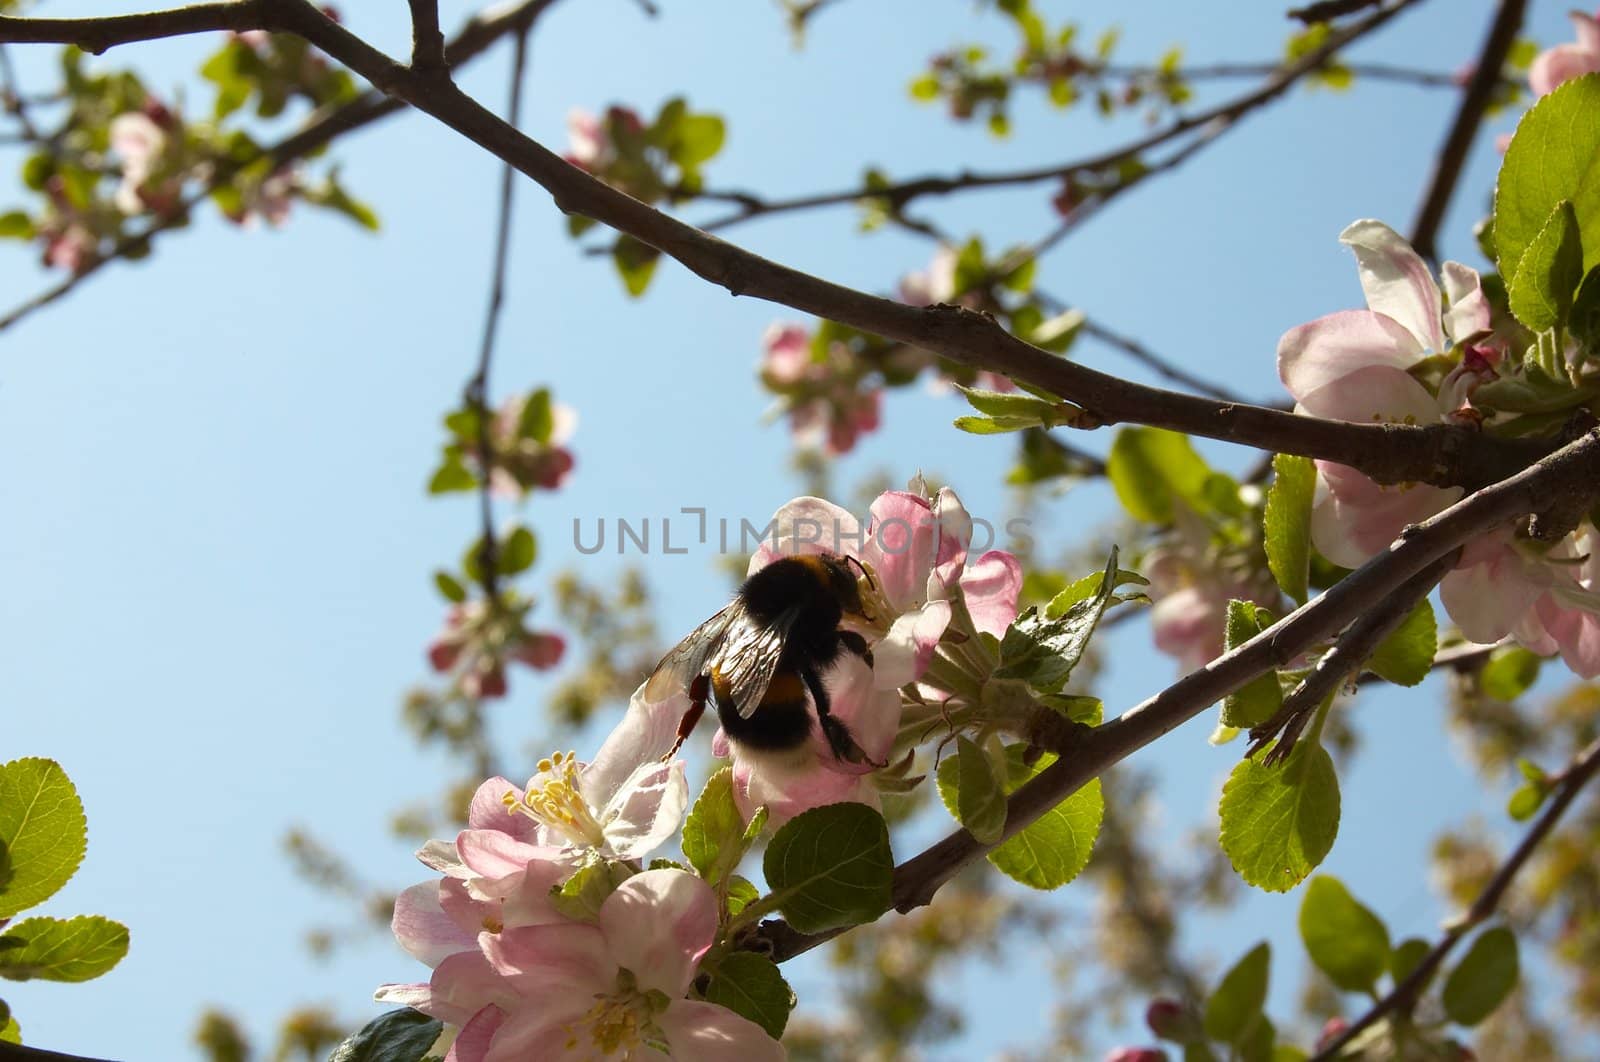 Bumblebee seeting on apple tree flower in early sumer.